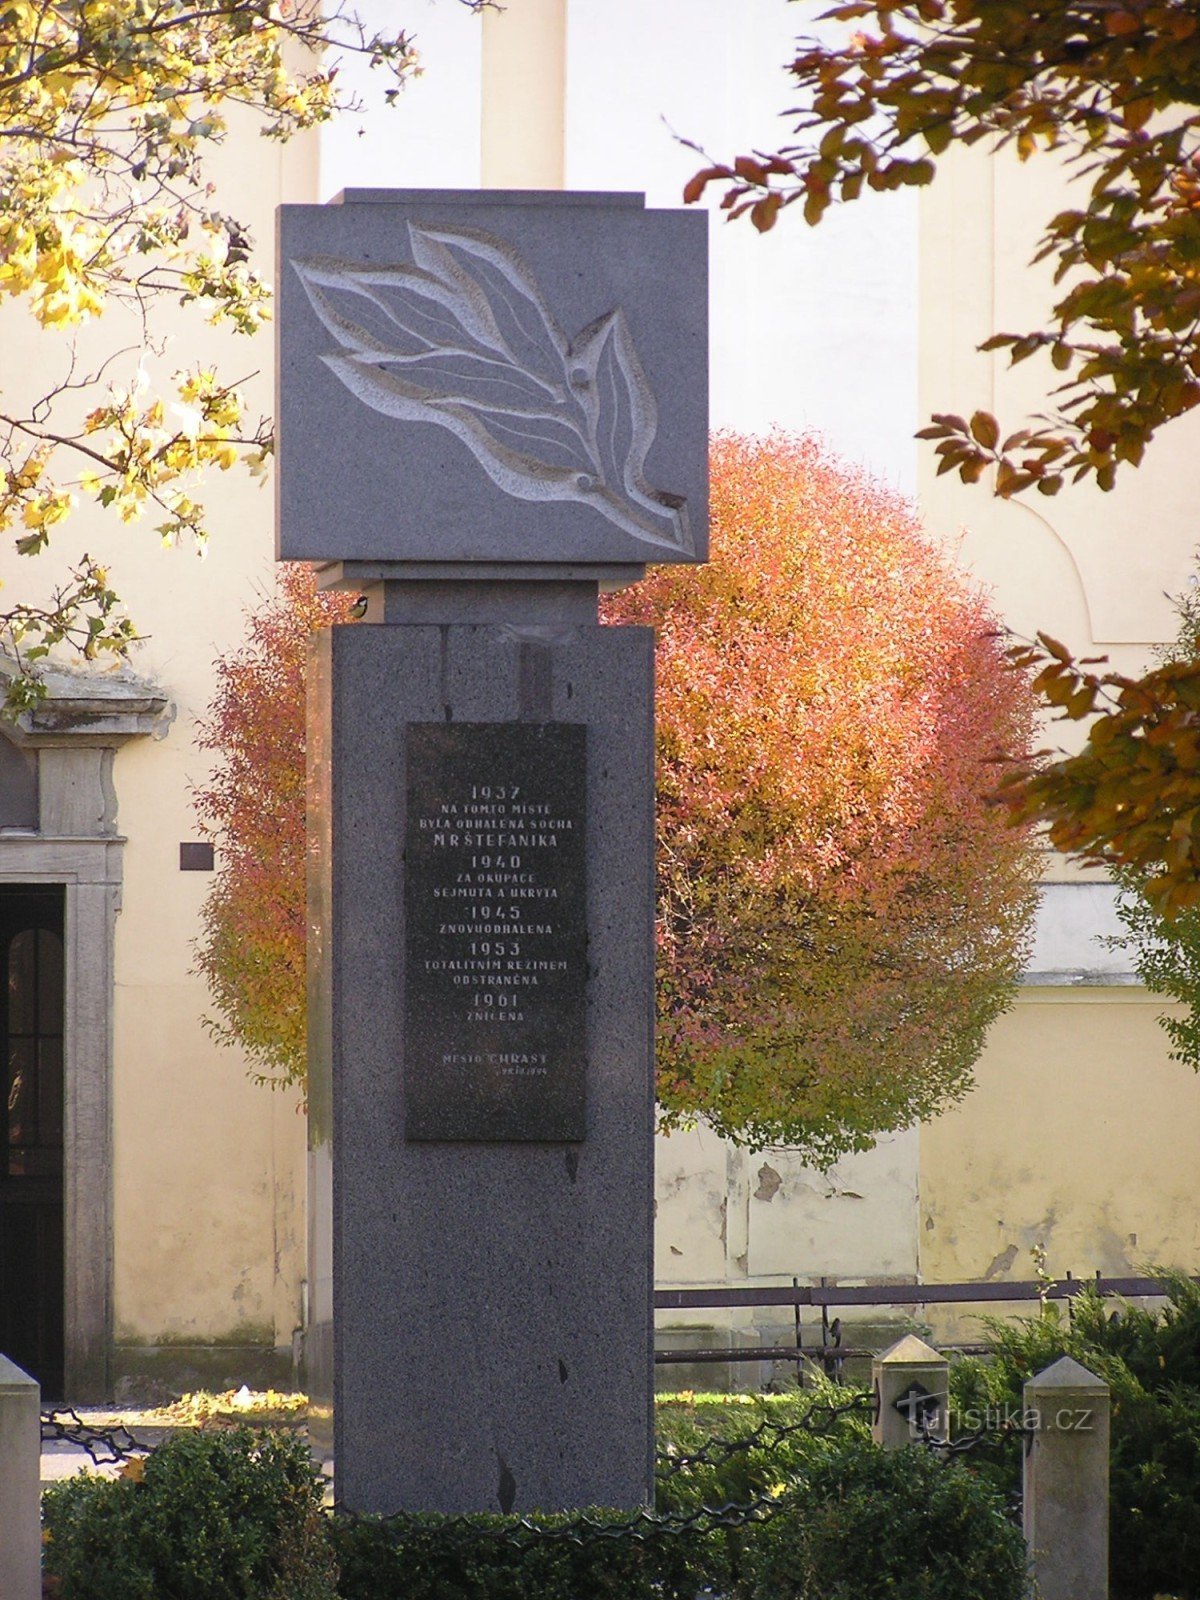 Monumento às vítimas das guerras